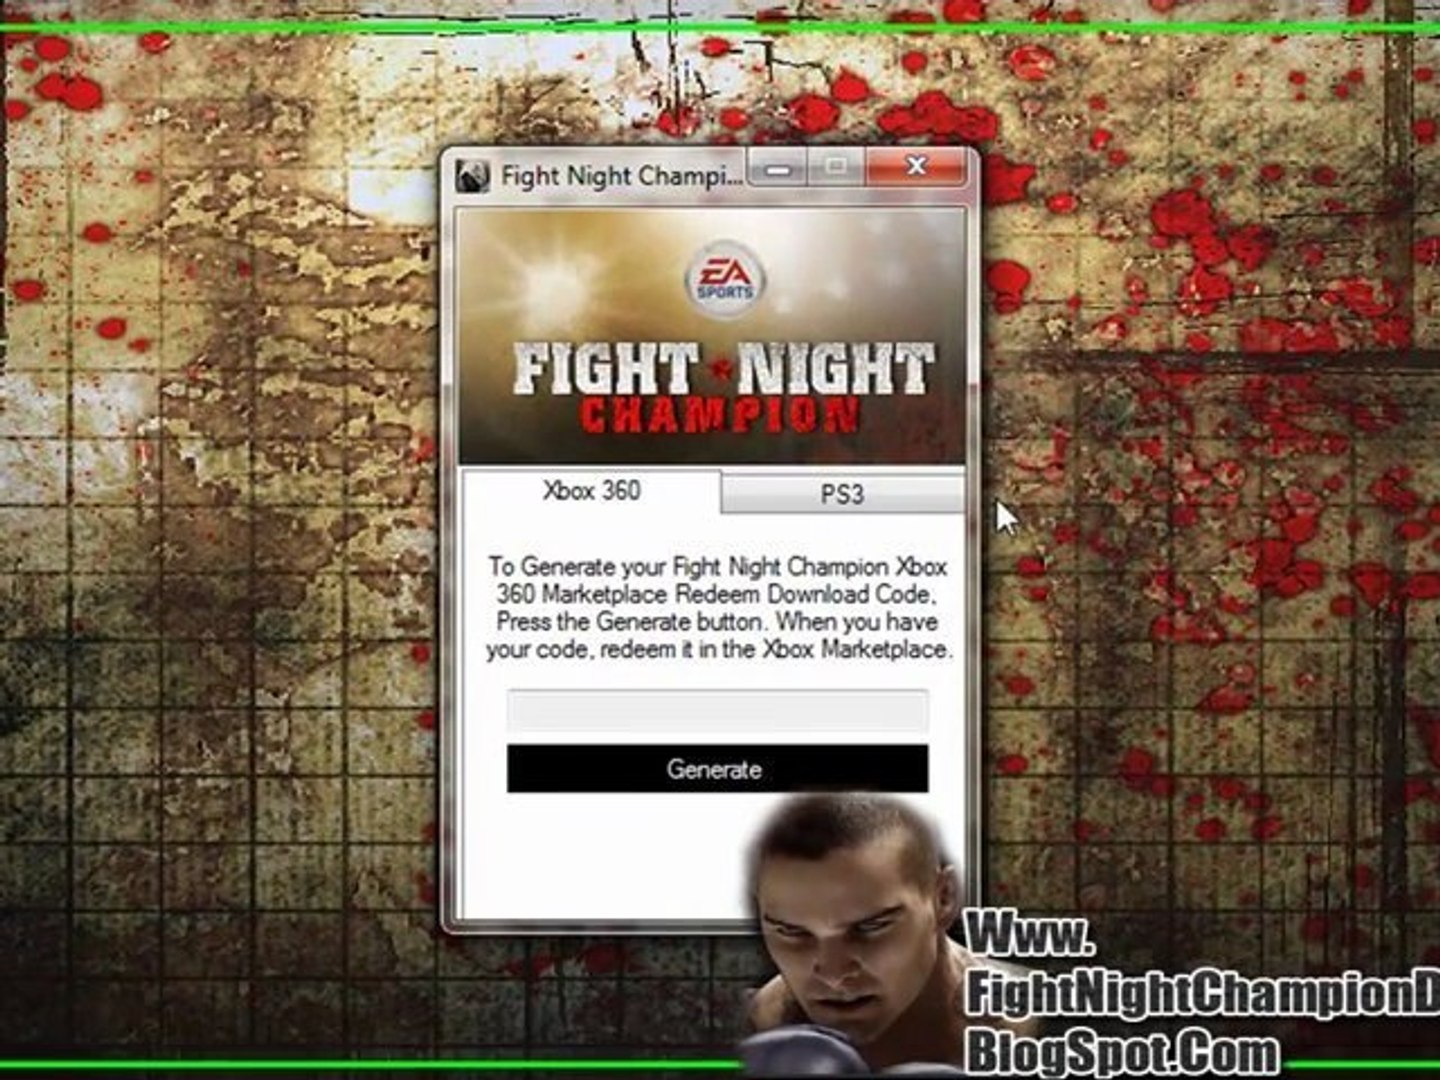 Fight Night Champion Free DLC Code Downloads - video Dailymotion